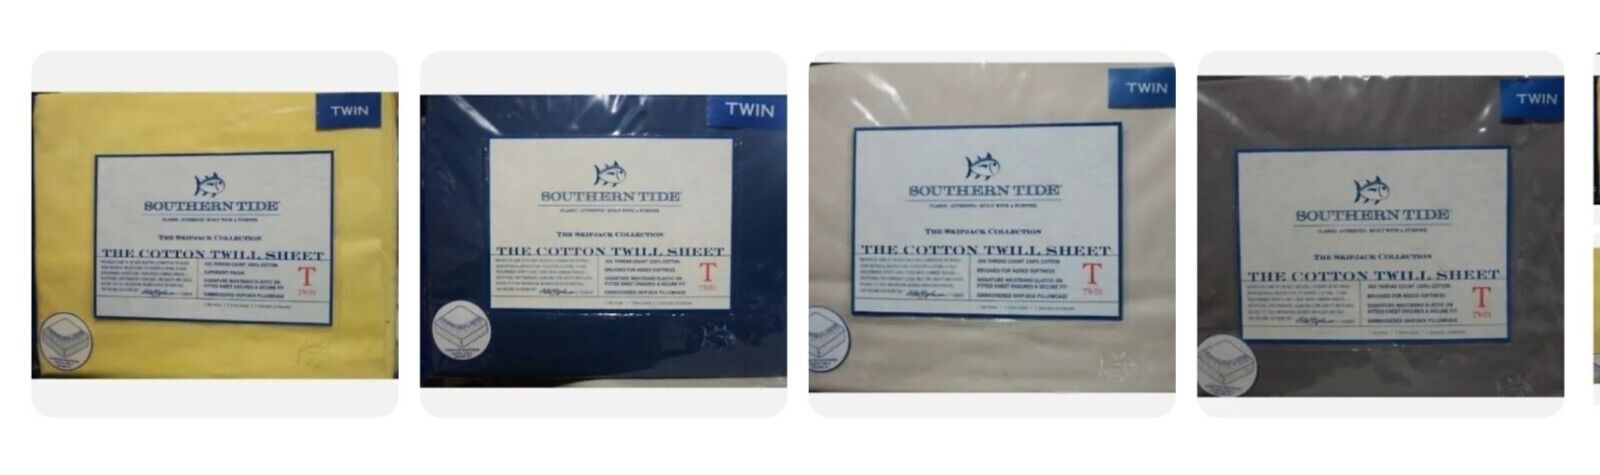 New SOUTHERN TIDE 300tc 100% Cotton Twill 4 Twin Size Sheet Sets 